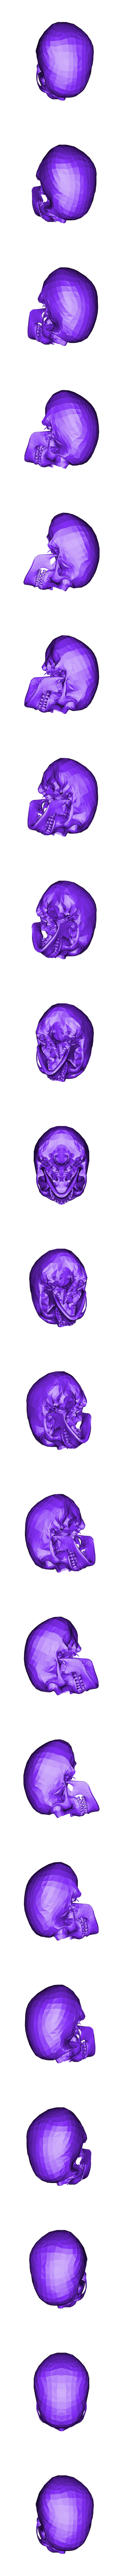 SkullTest.stl Download free STL file Human Skull • 3D print model, JamieLaing